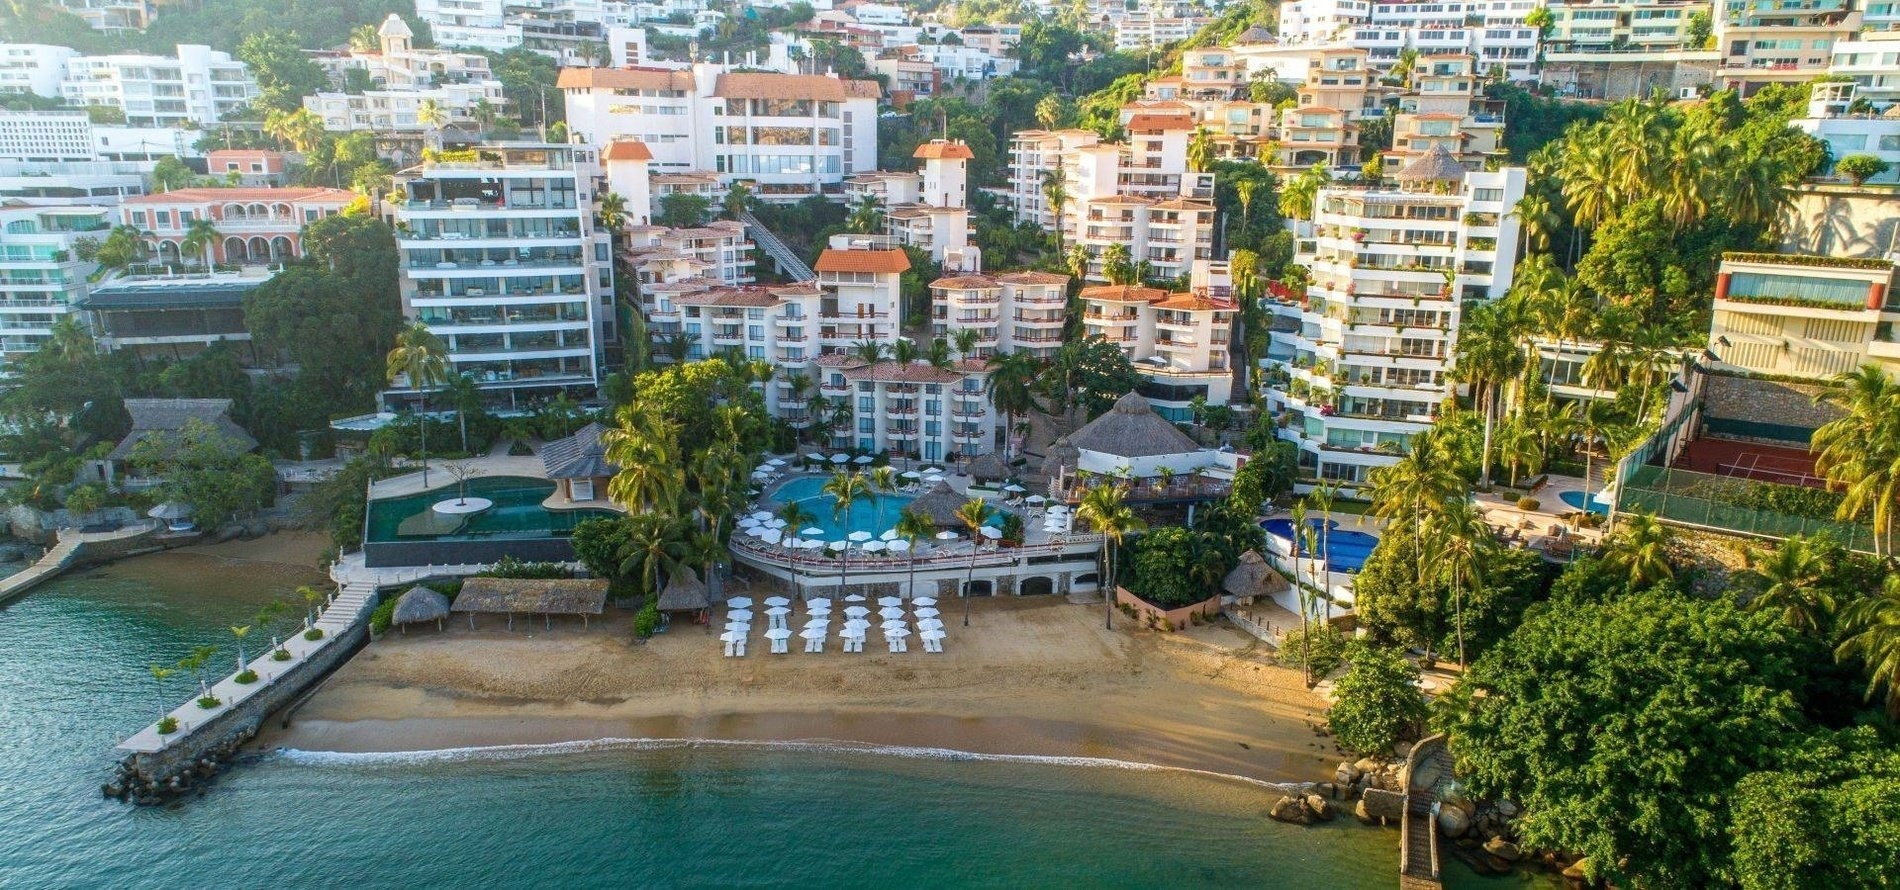 Hotel Park Royal Beach Acapulco | Pacífico Mexicano | Web Oficial